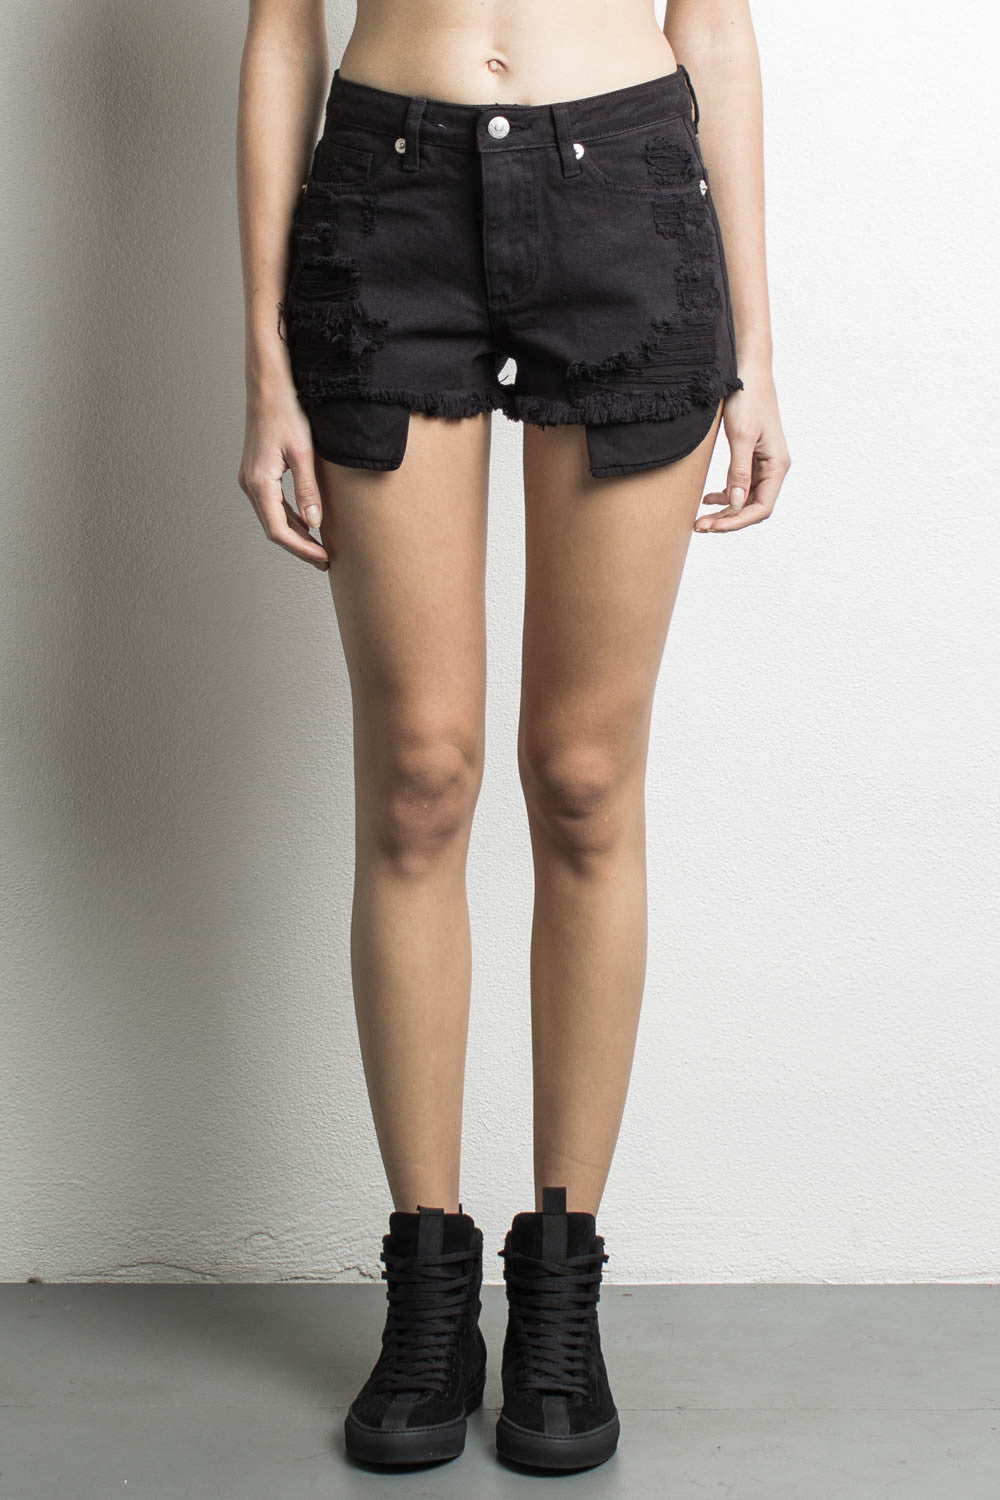 women's distressed black denim shorts